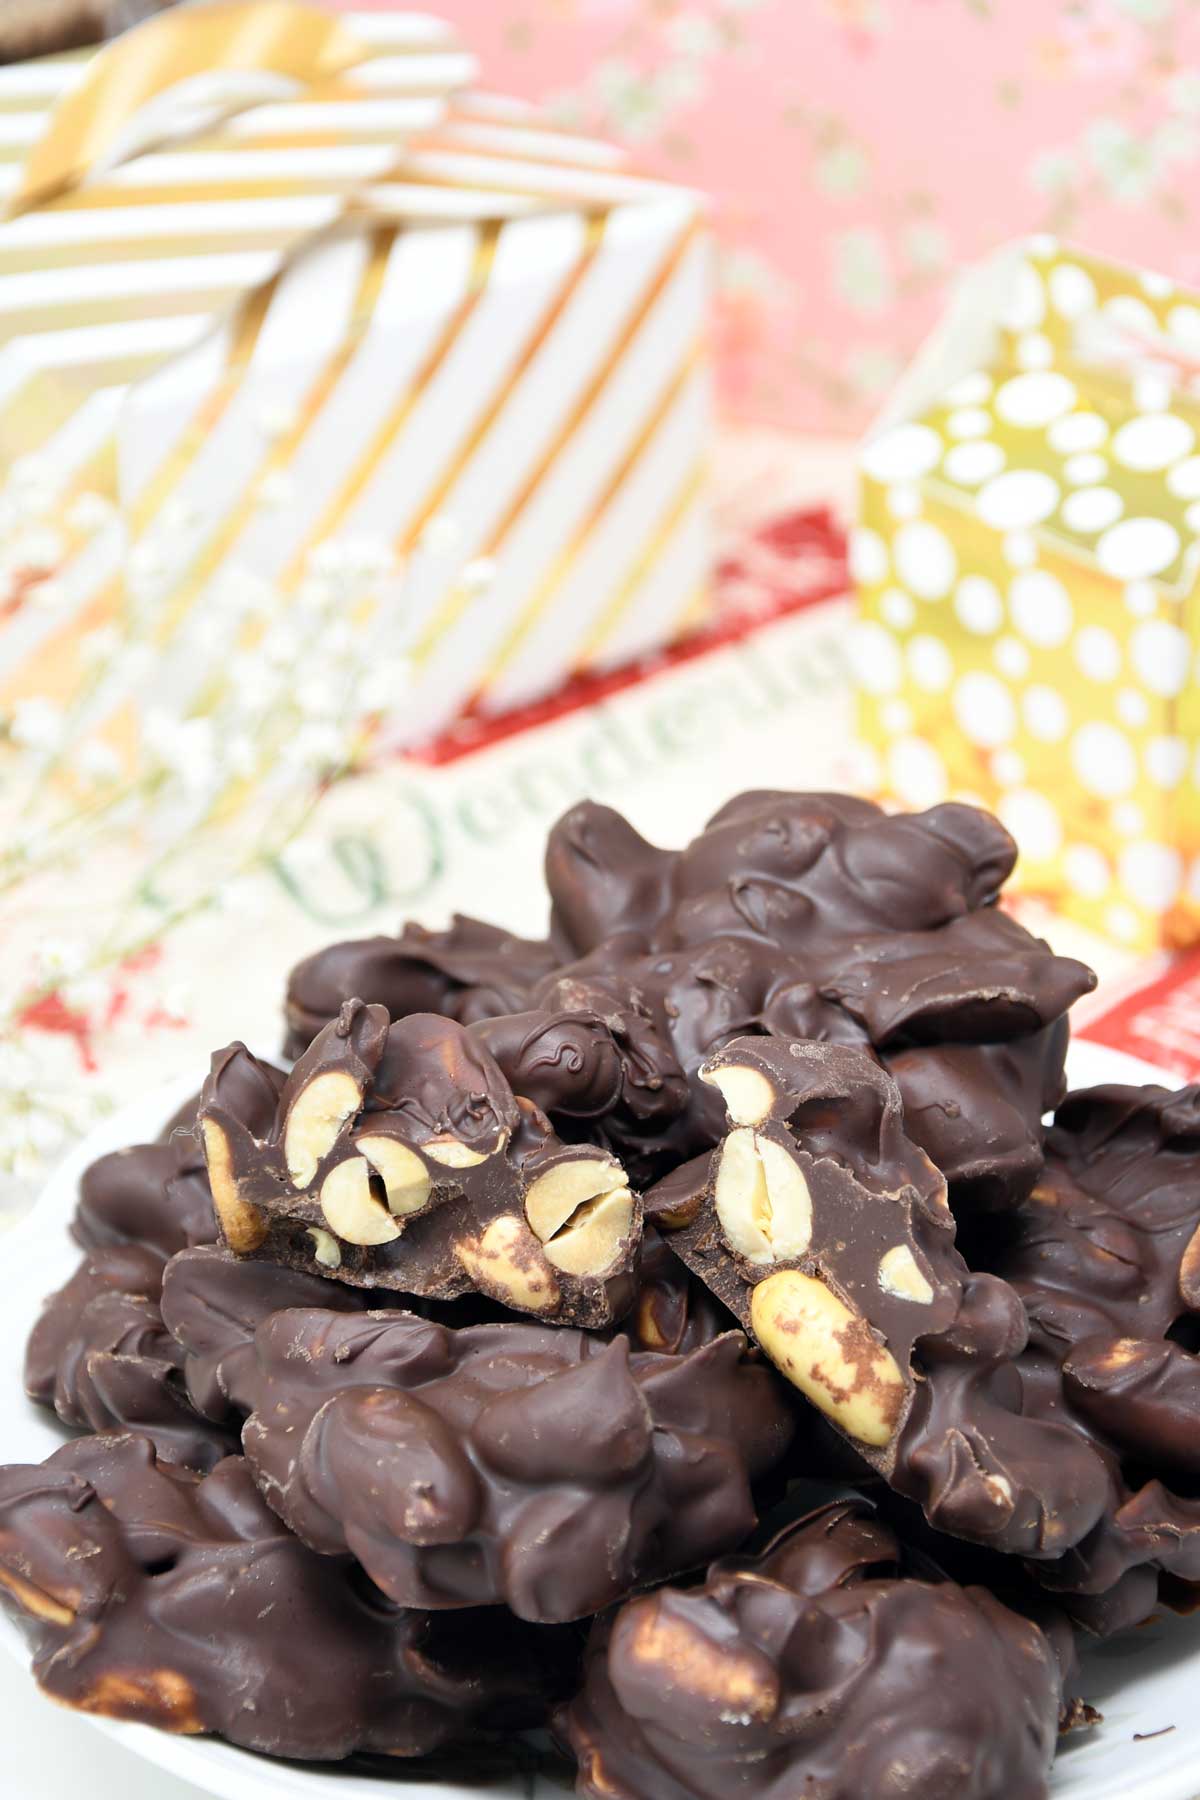 Chocolate covered peanuts.